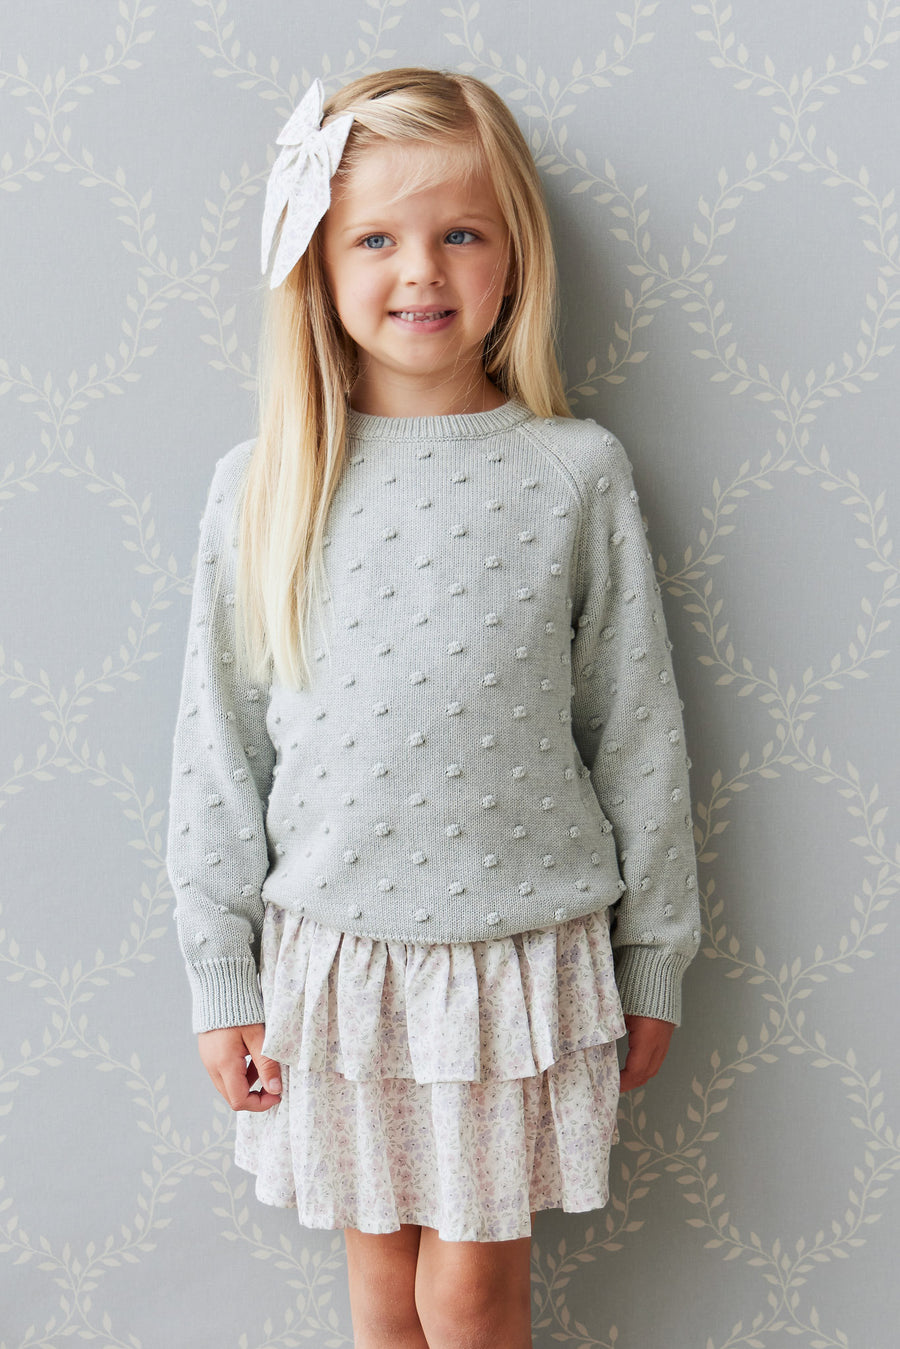 Organic Cotton Samantha Skirt - Fifi Lilac Childrens Skirt from Jamie Kay NZ